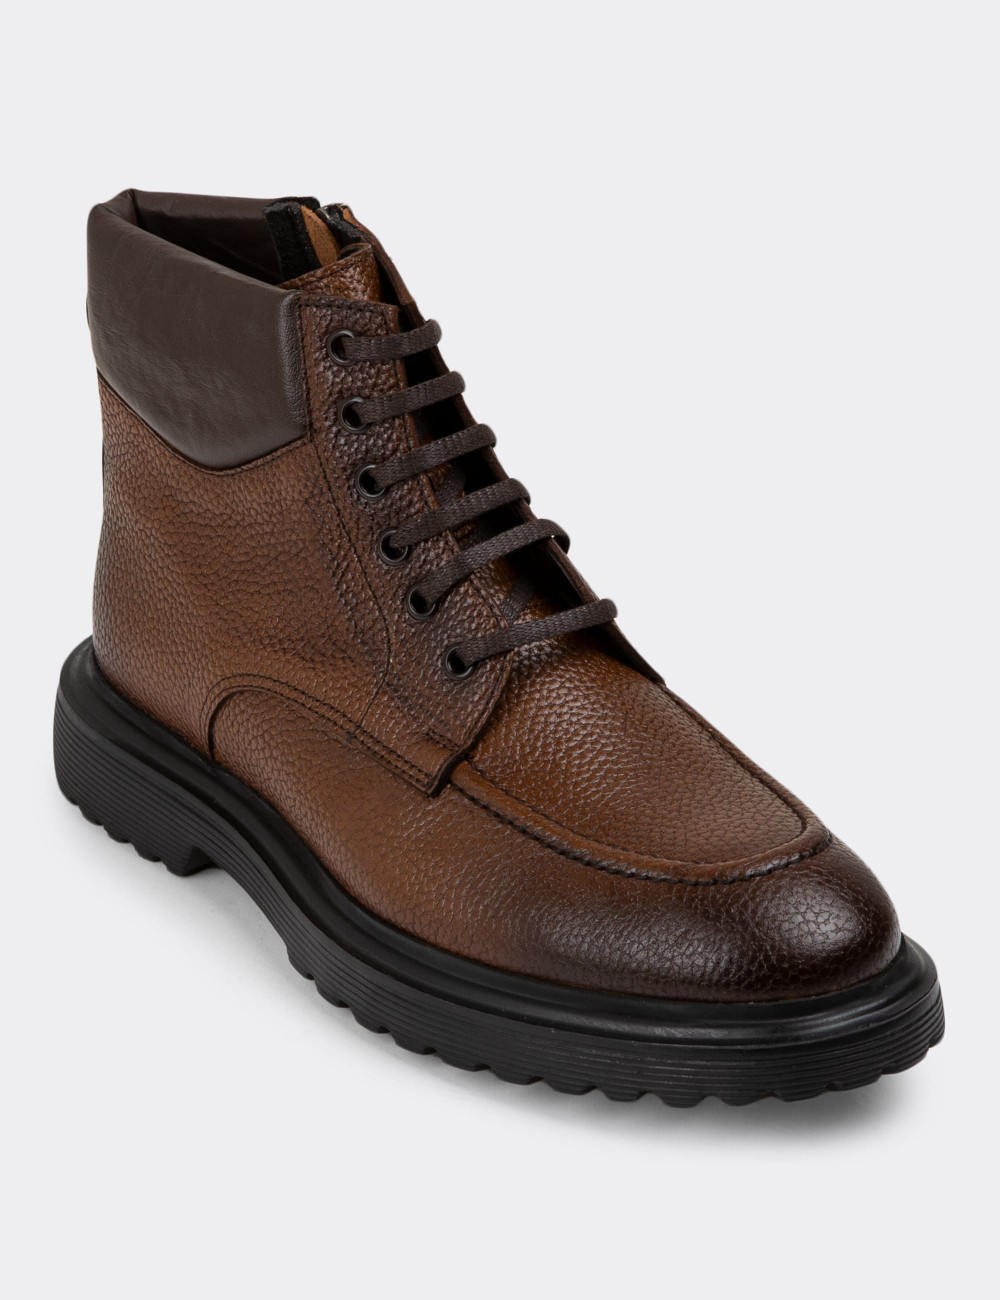 Tan Leather Boots - 01929MTBAE01